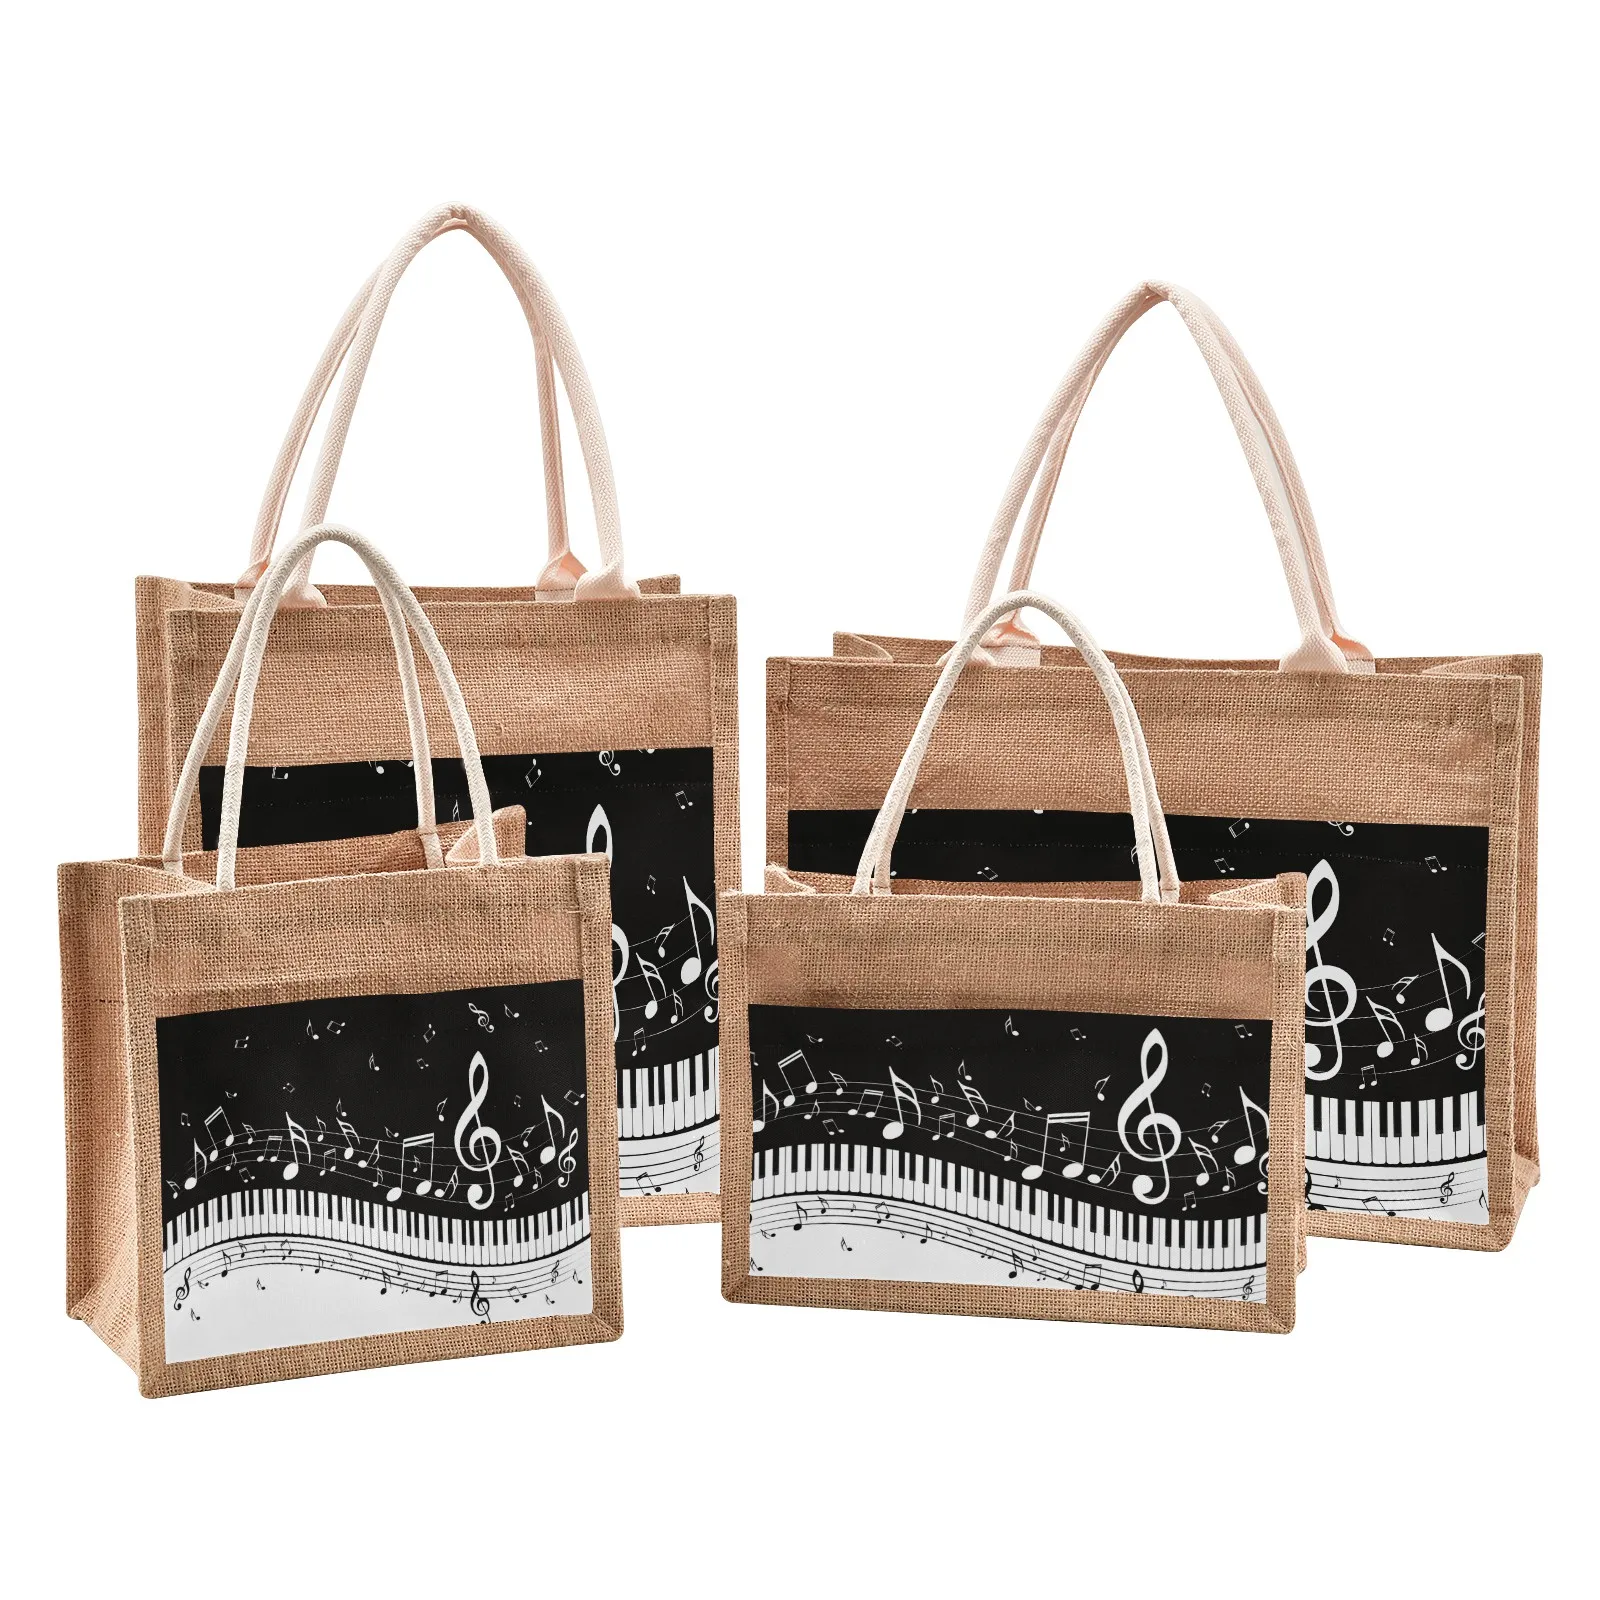 

Musical Note Jute Tote Bag With Handles Zipper Pocket Shopping Grocery Bag Large Capacity Portable Burlap Bag Storage Organizer